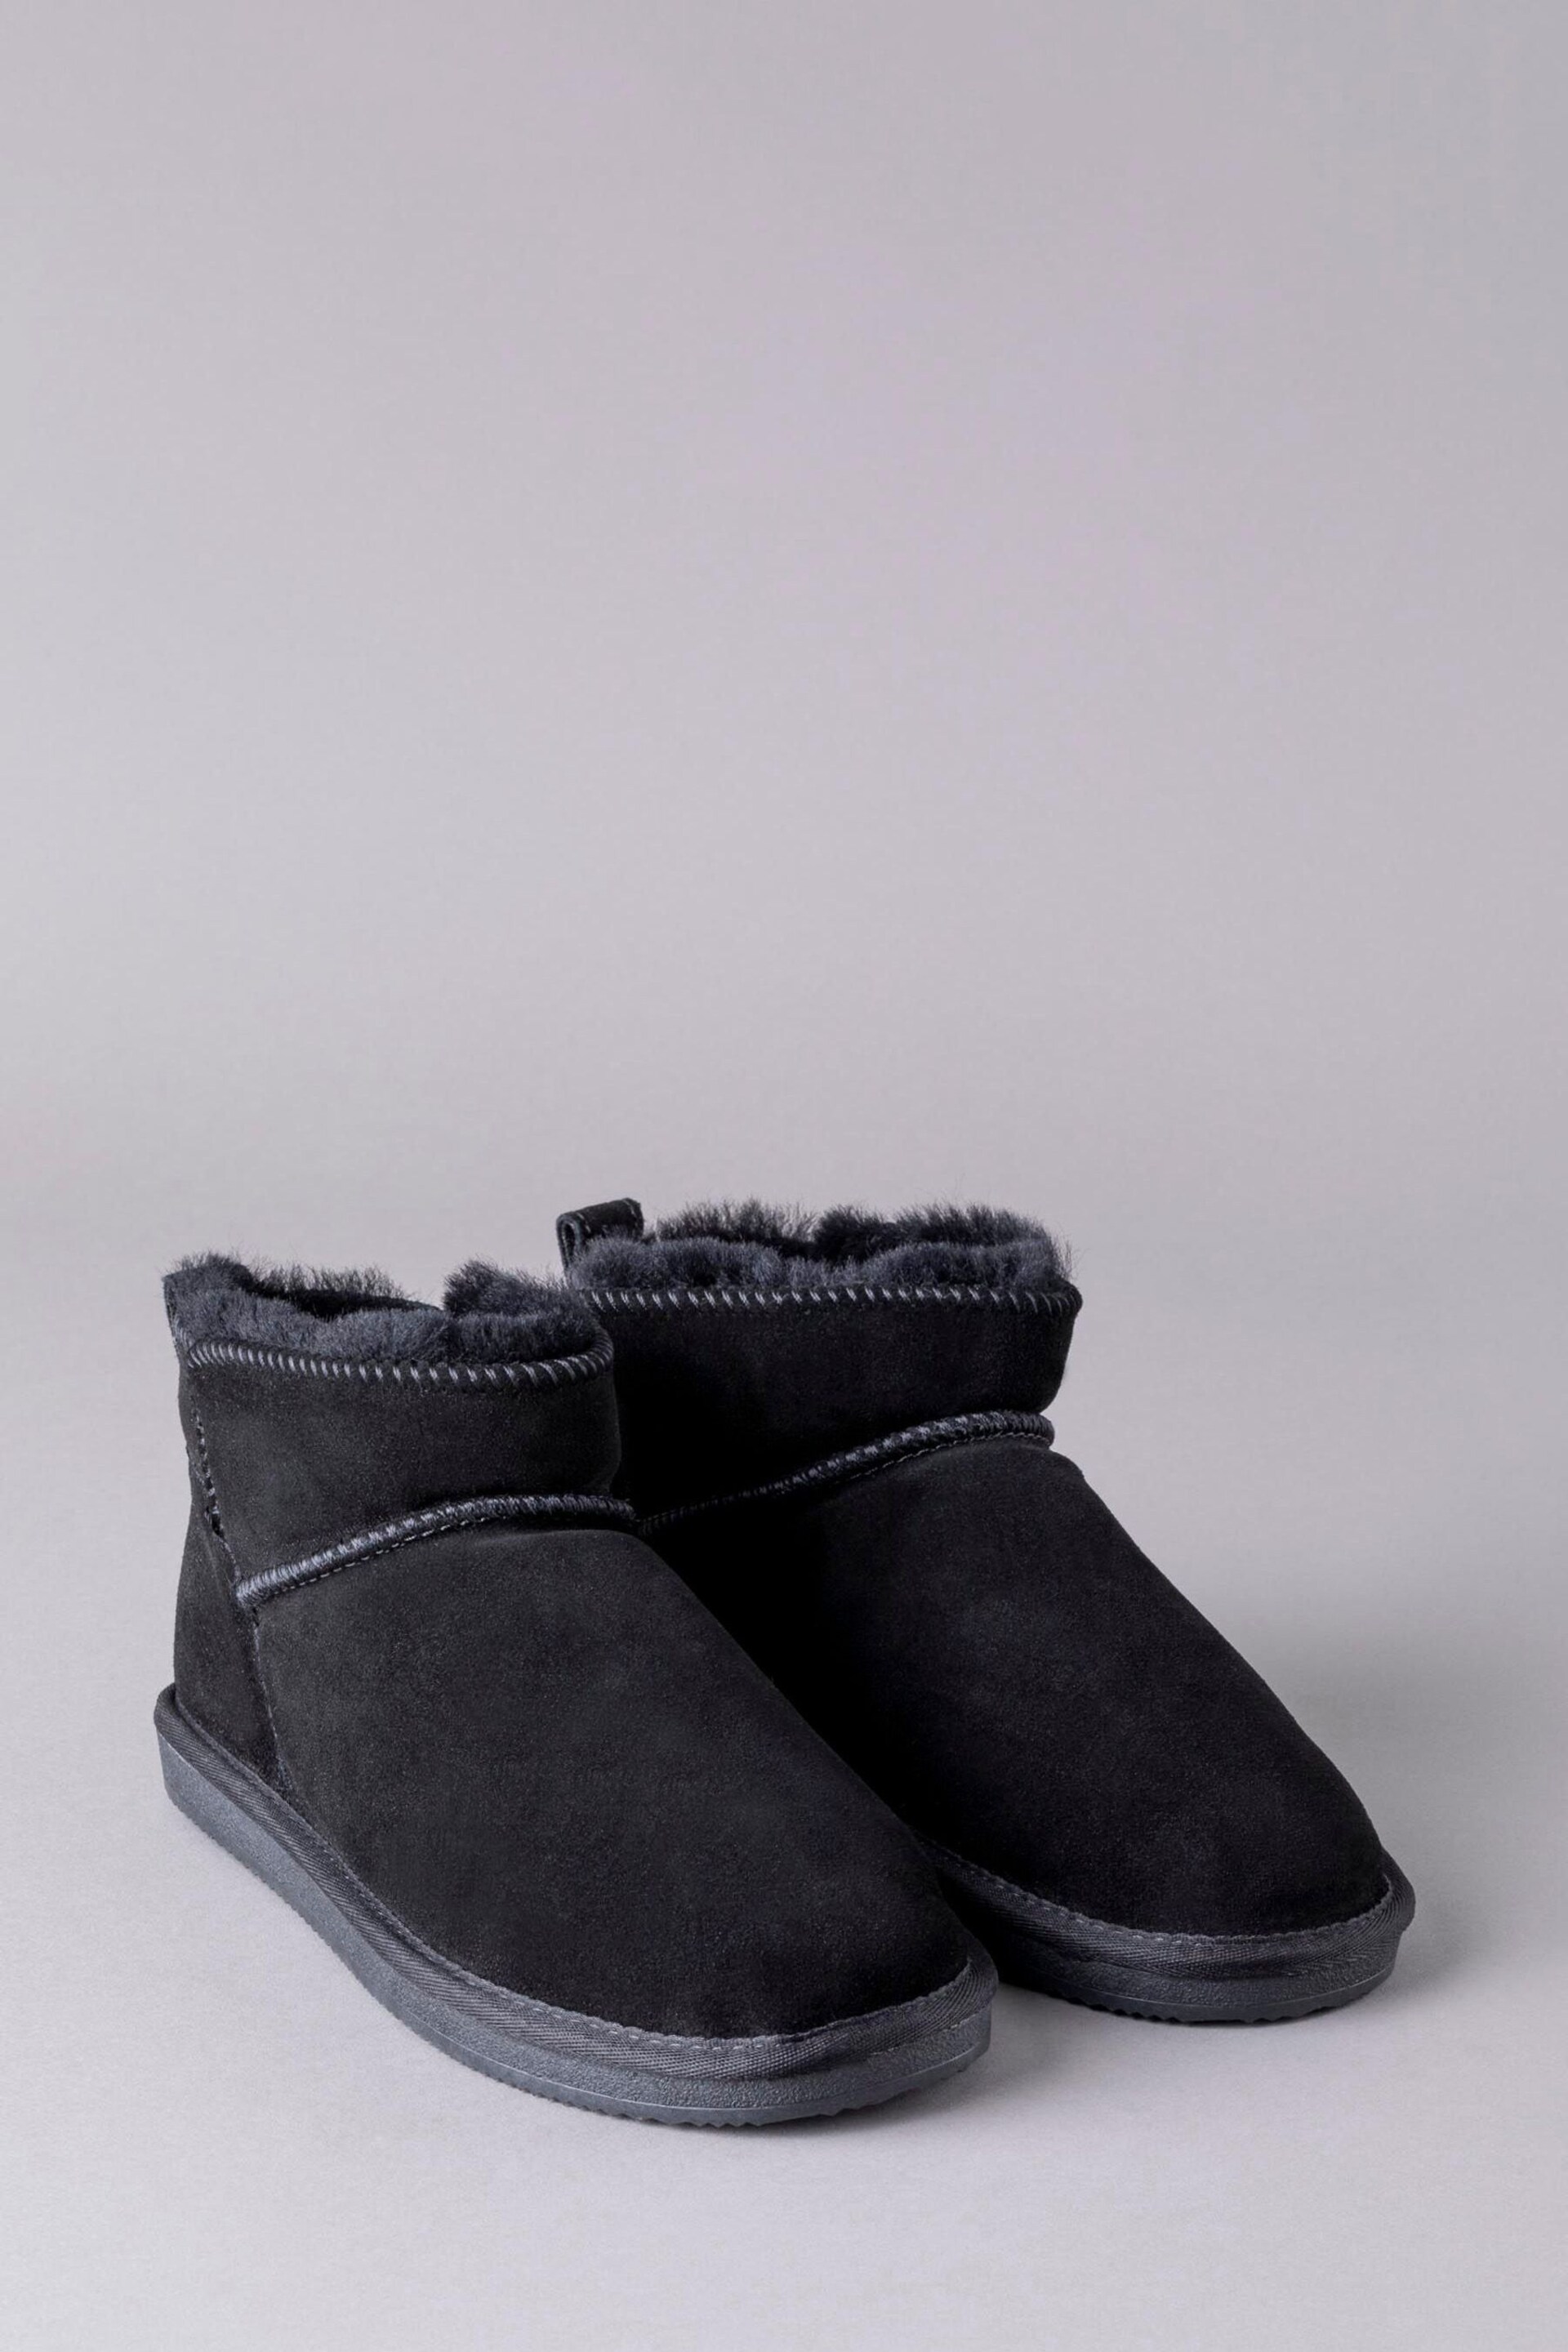 Lakeland Leather Black Ladies Sheepskin Mini Boot Slippers - Image 2 of 5